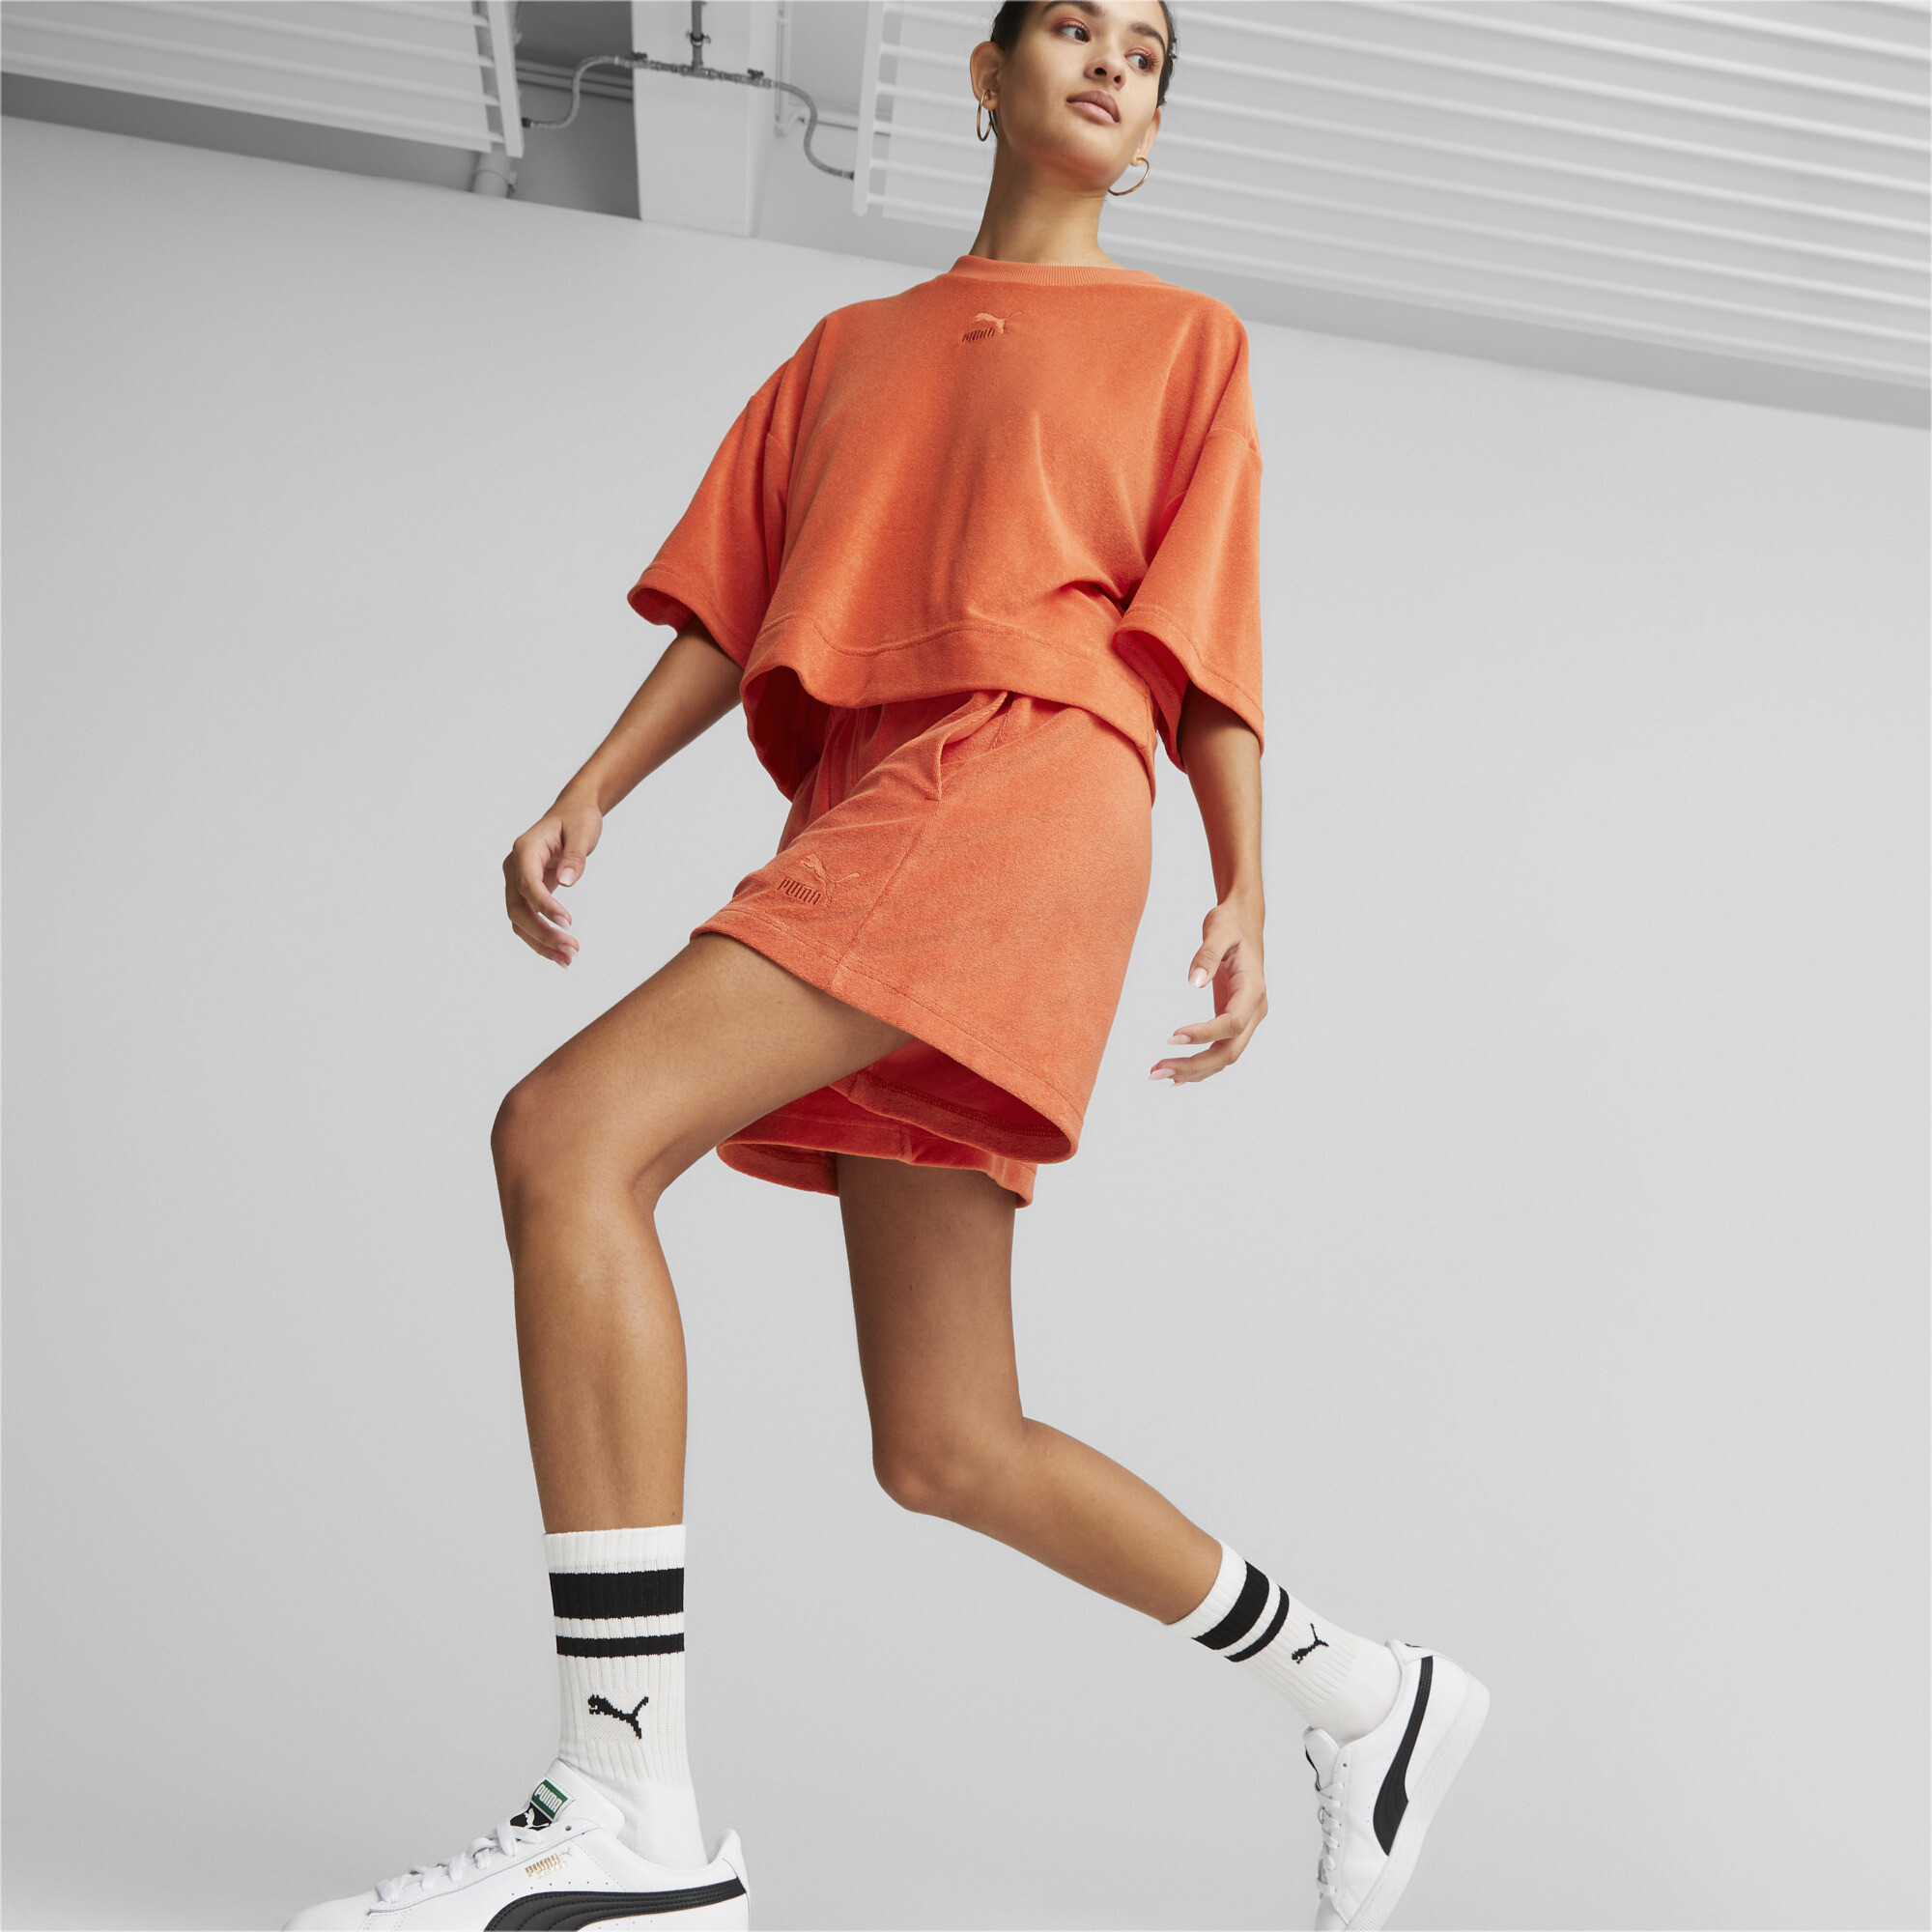 Women's Puma Classics Towelling Shorts, Orange, Size XL, Clothing